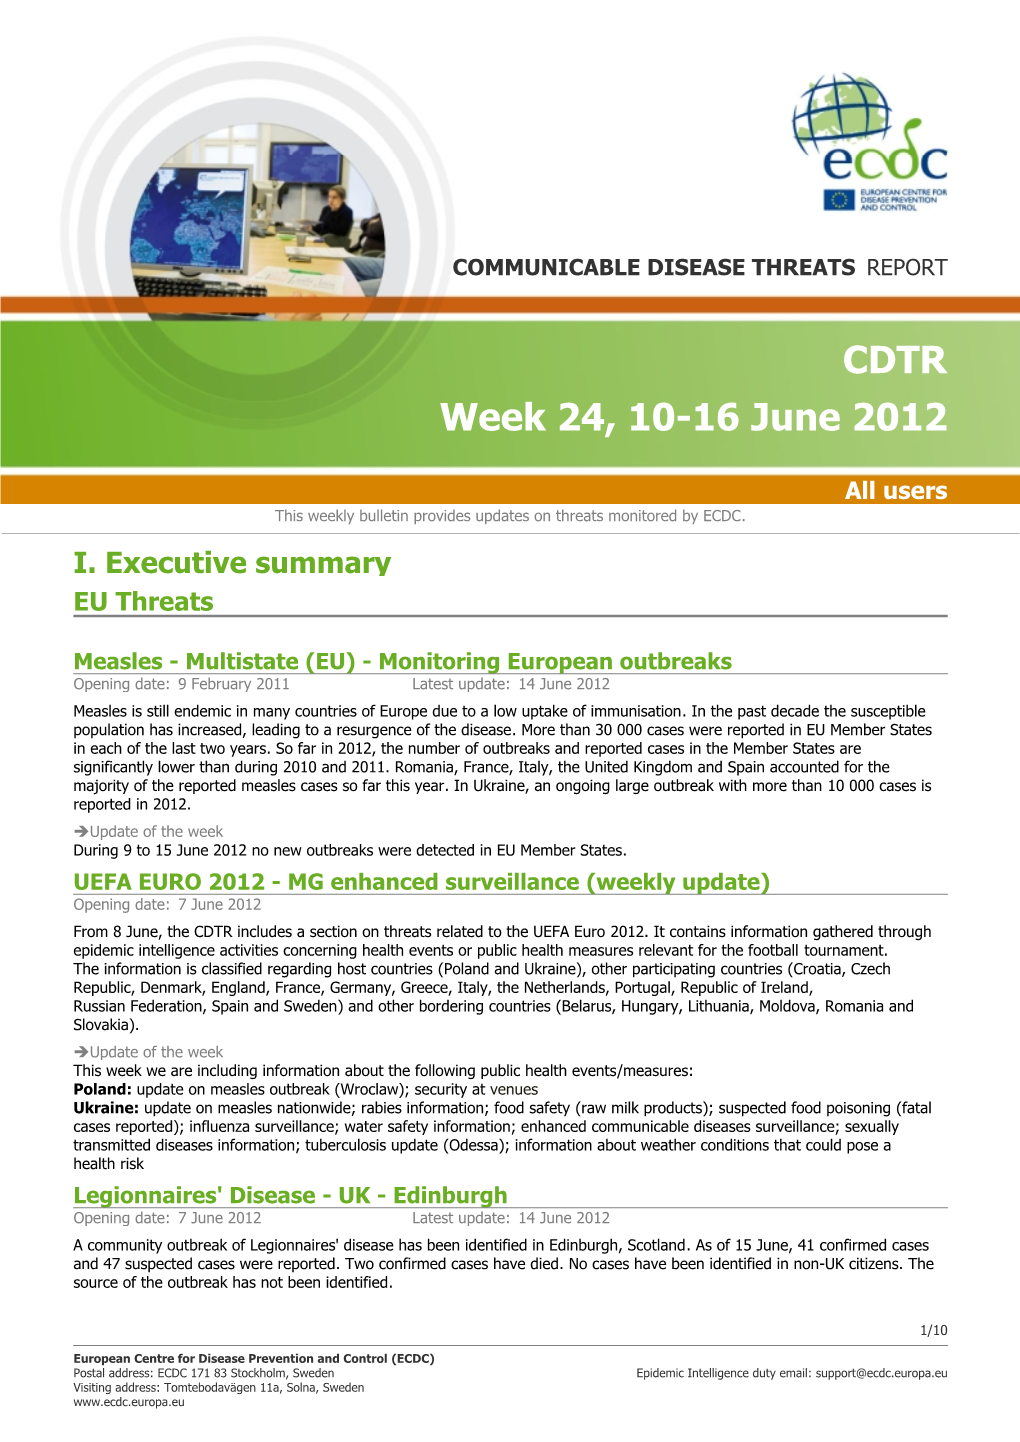 Week 24, 10-16 June 2012 CDTR